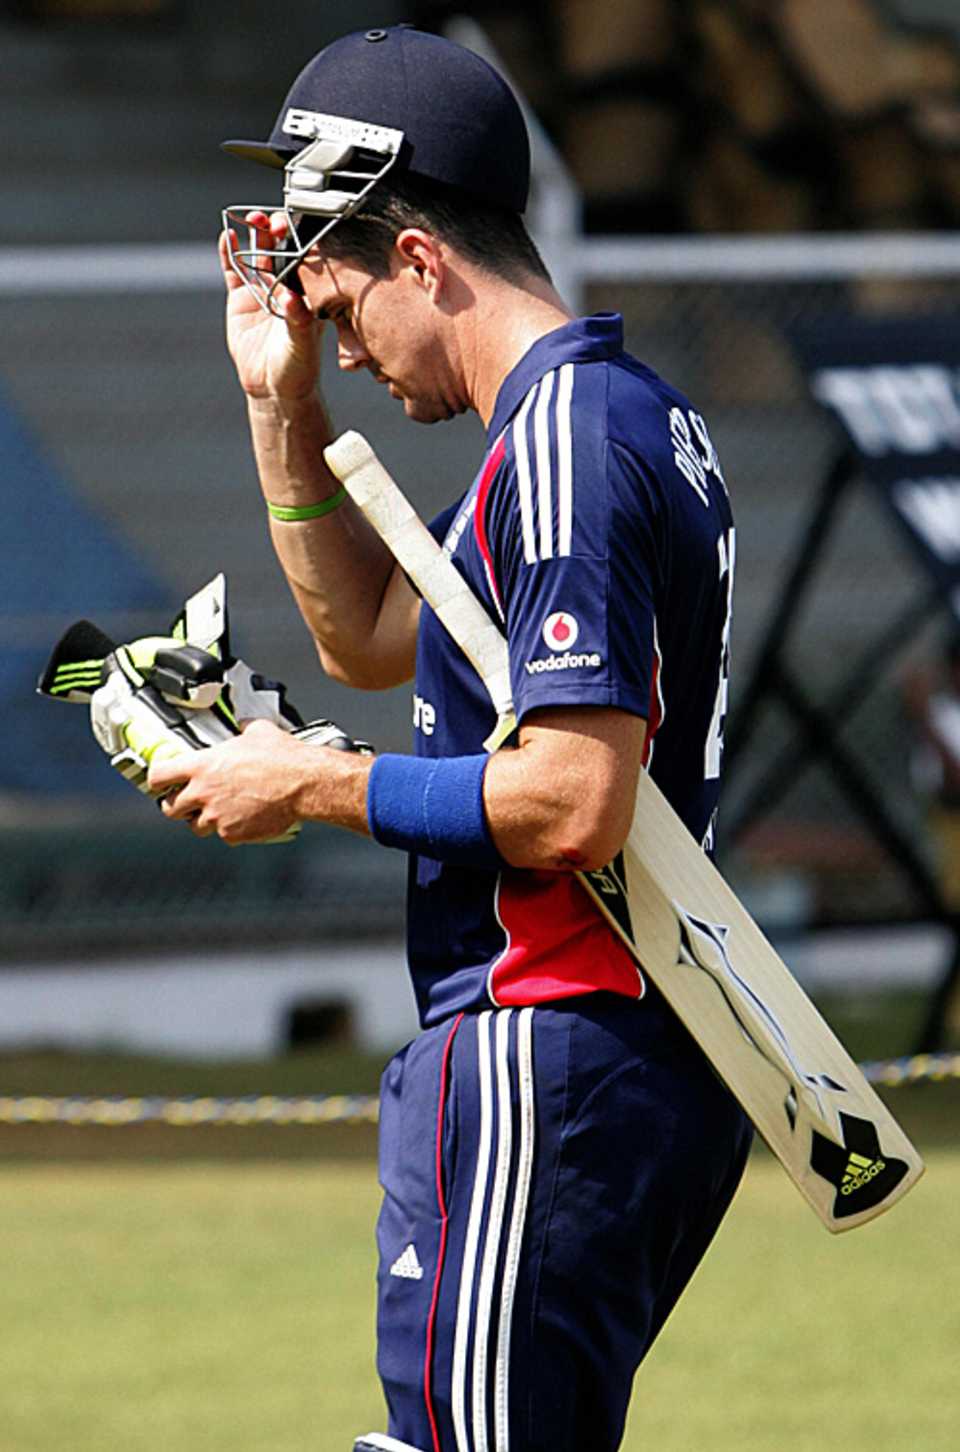 Kevin Pietersen trudges off for a duck, Mumbai Cricket Association President's XI v England XI, Mumbai, November 11, 2008